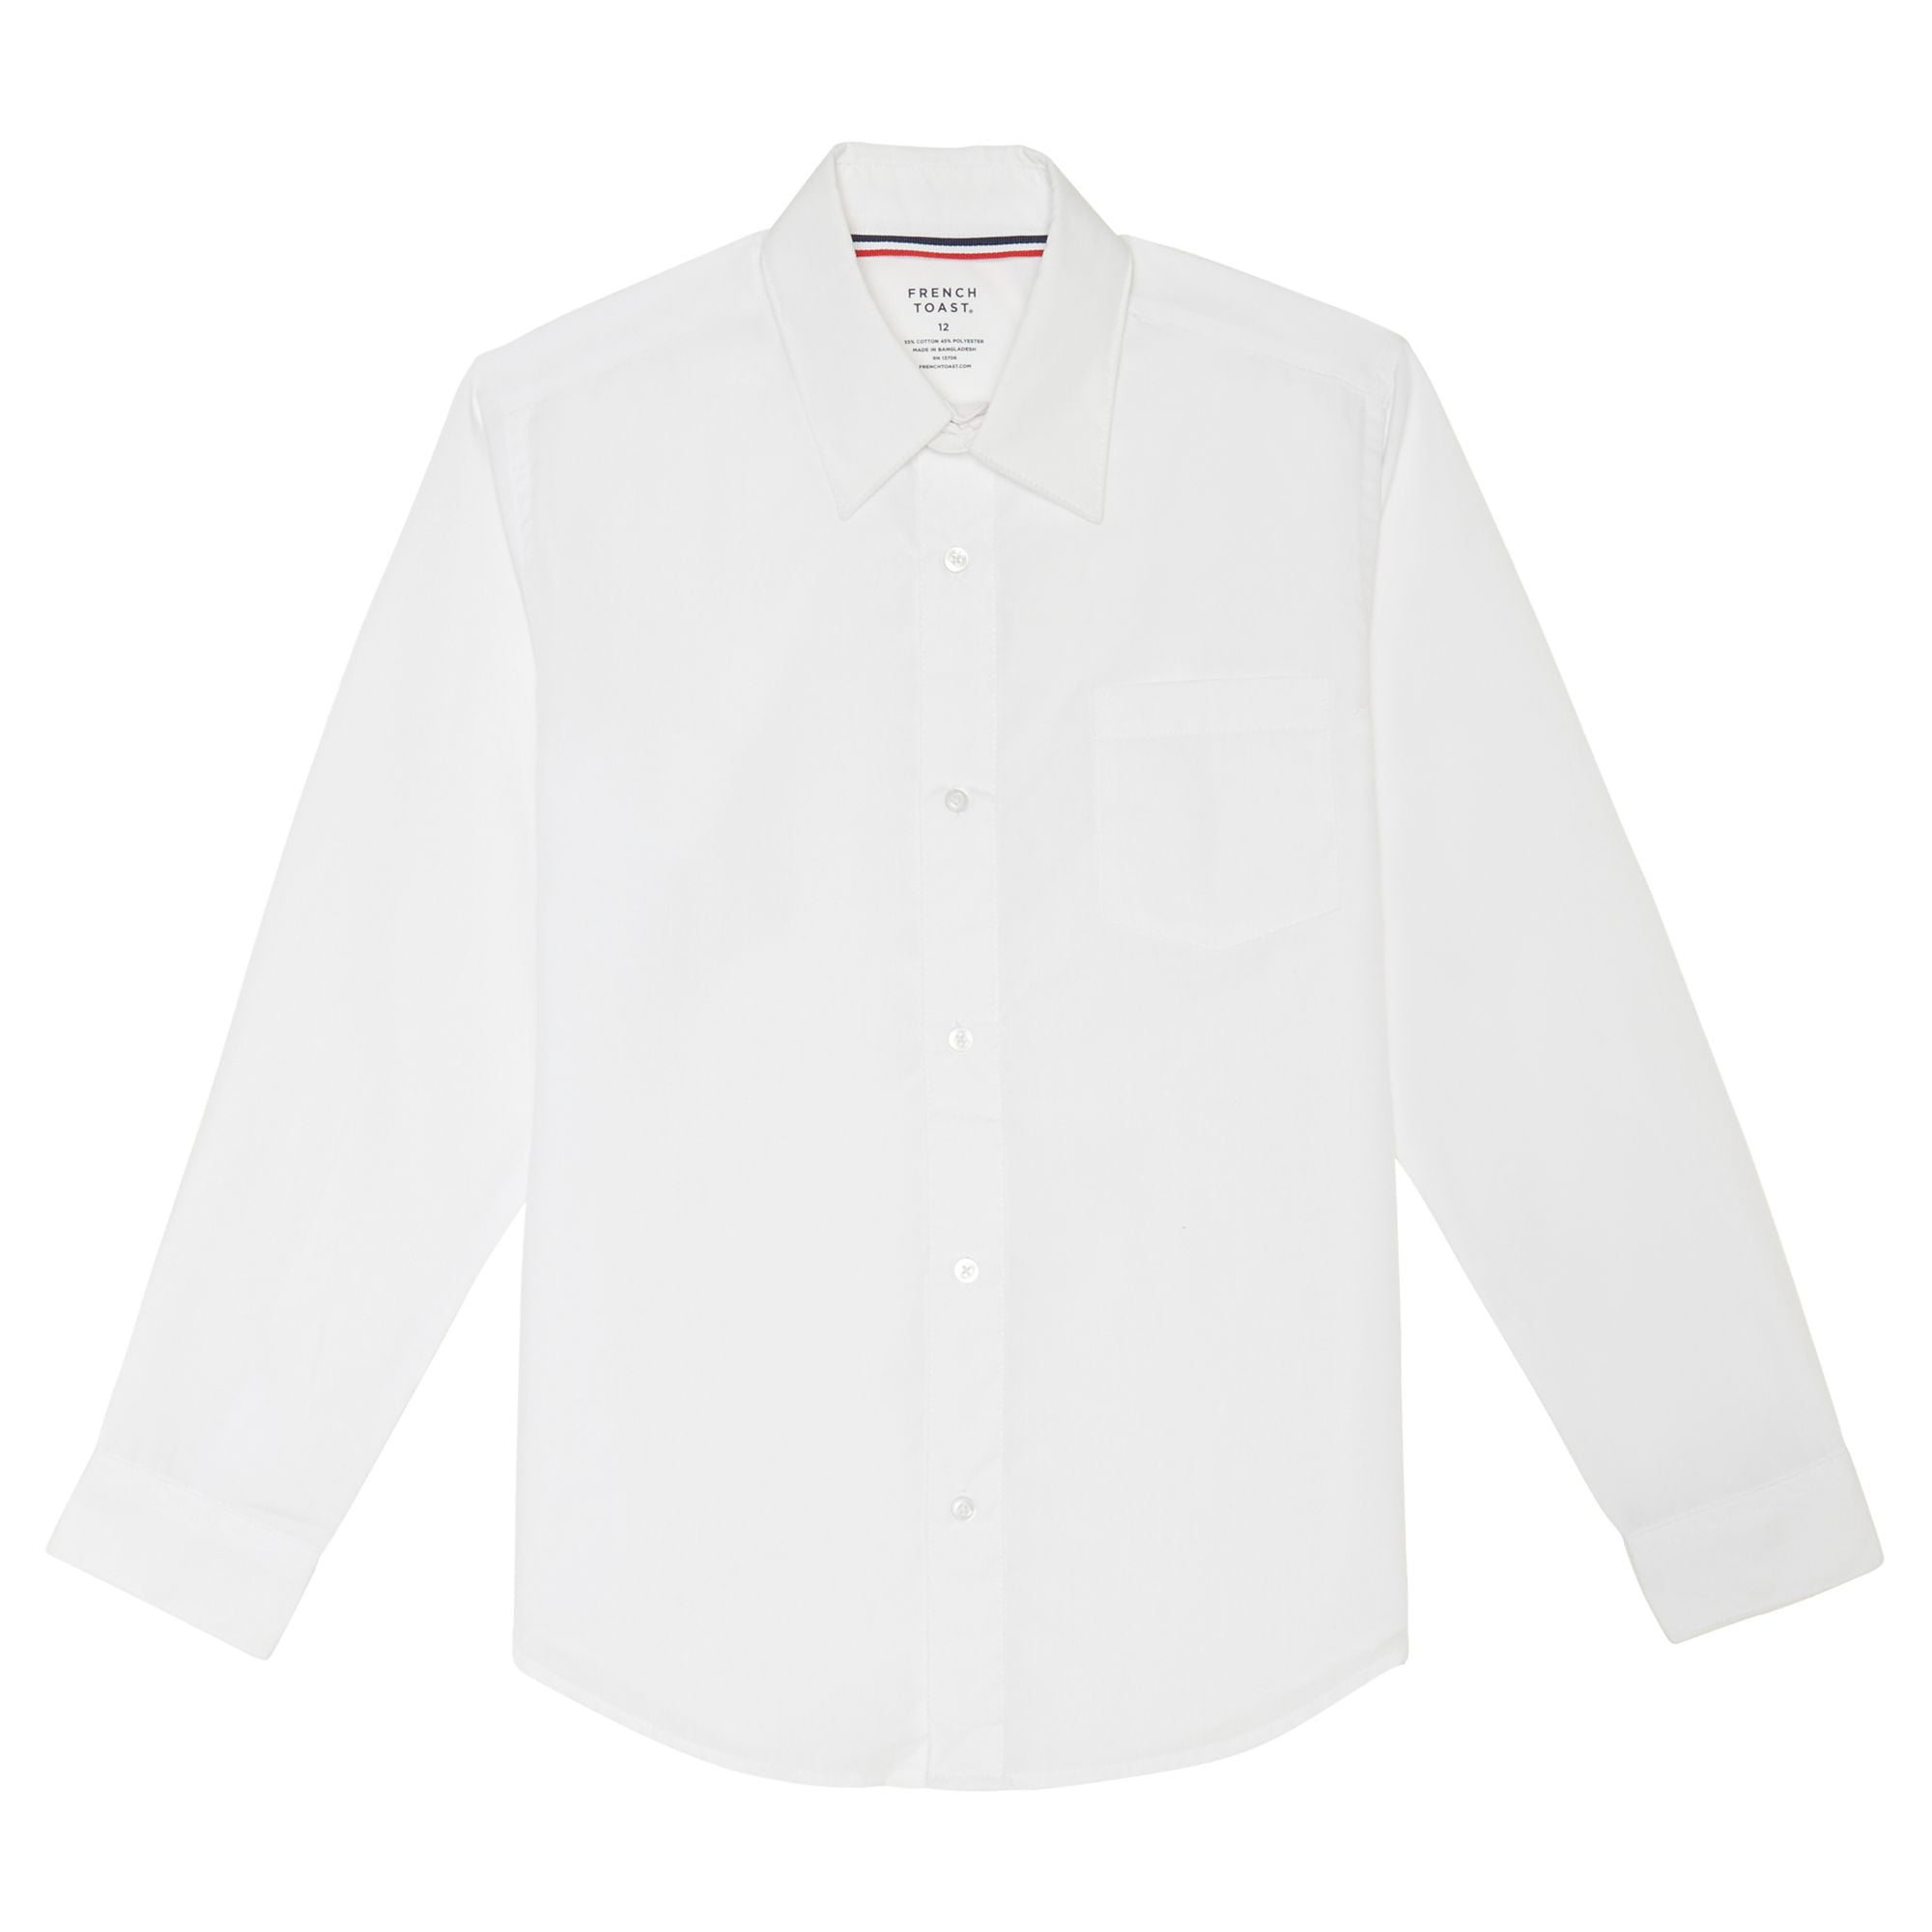 RIFLE KAYNEE Unisex Nexpander S/S Button-Down Shirt 